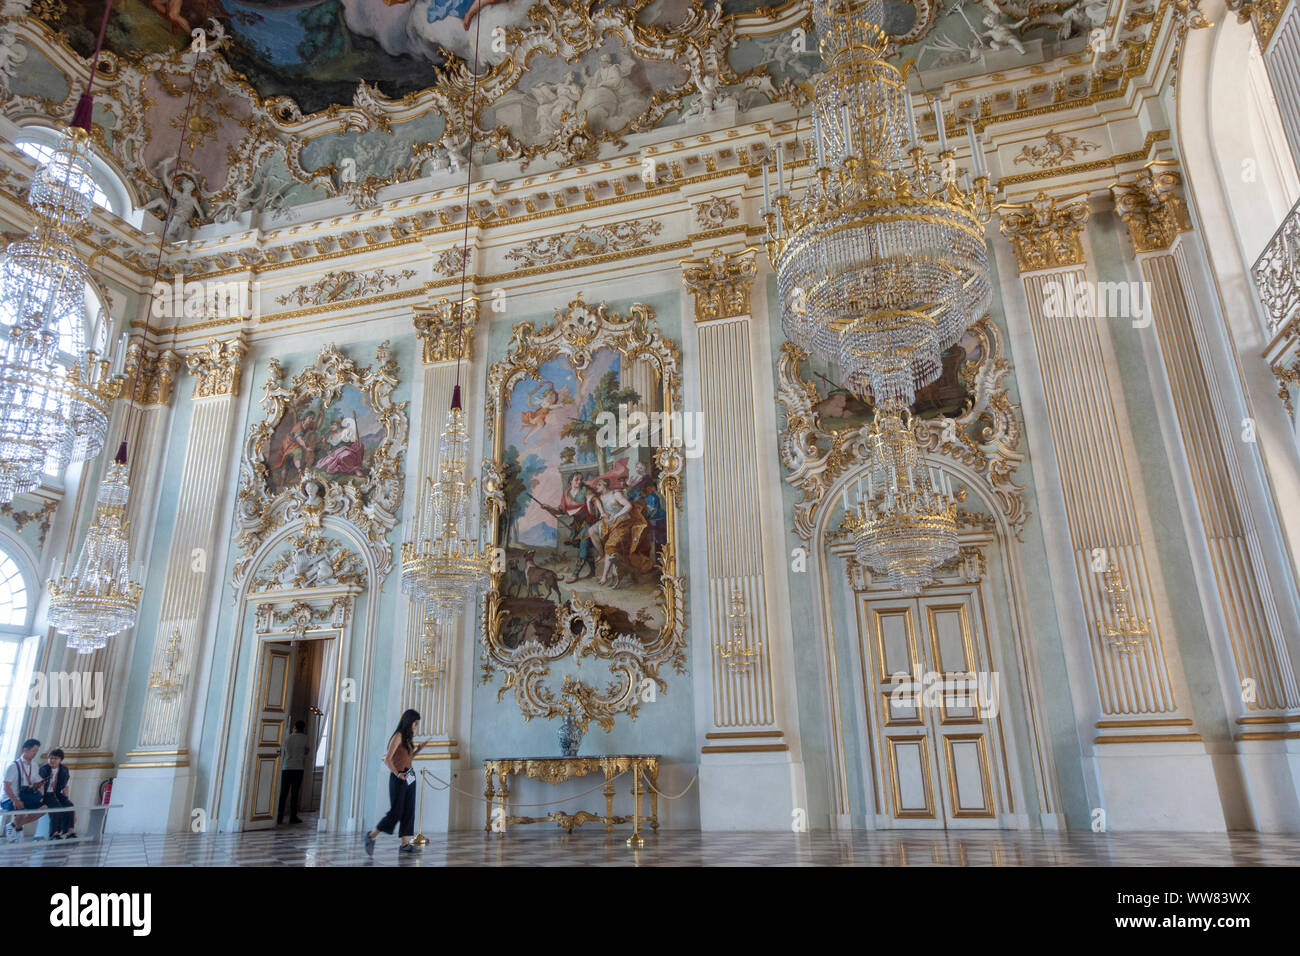 The stunning Great Hall inside the Nymphenburg Palace (Schloss Nymphenburg), Munich, Bavaria, Germany. Stock Photo